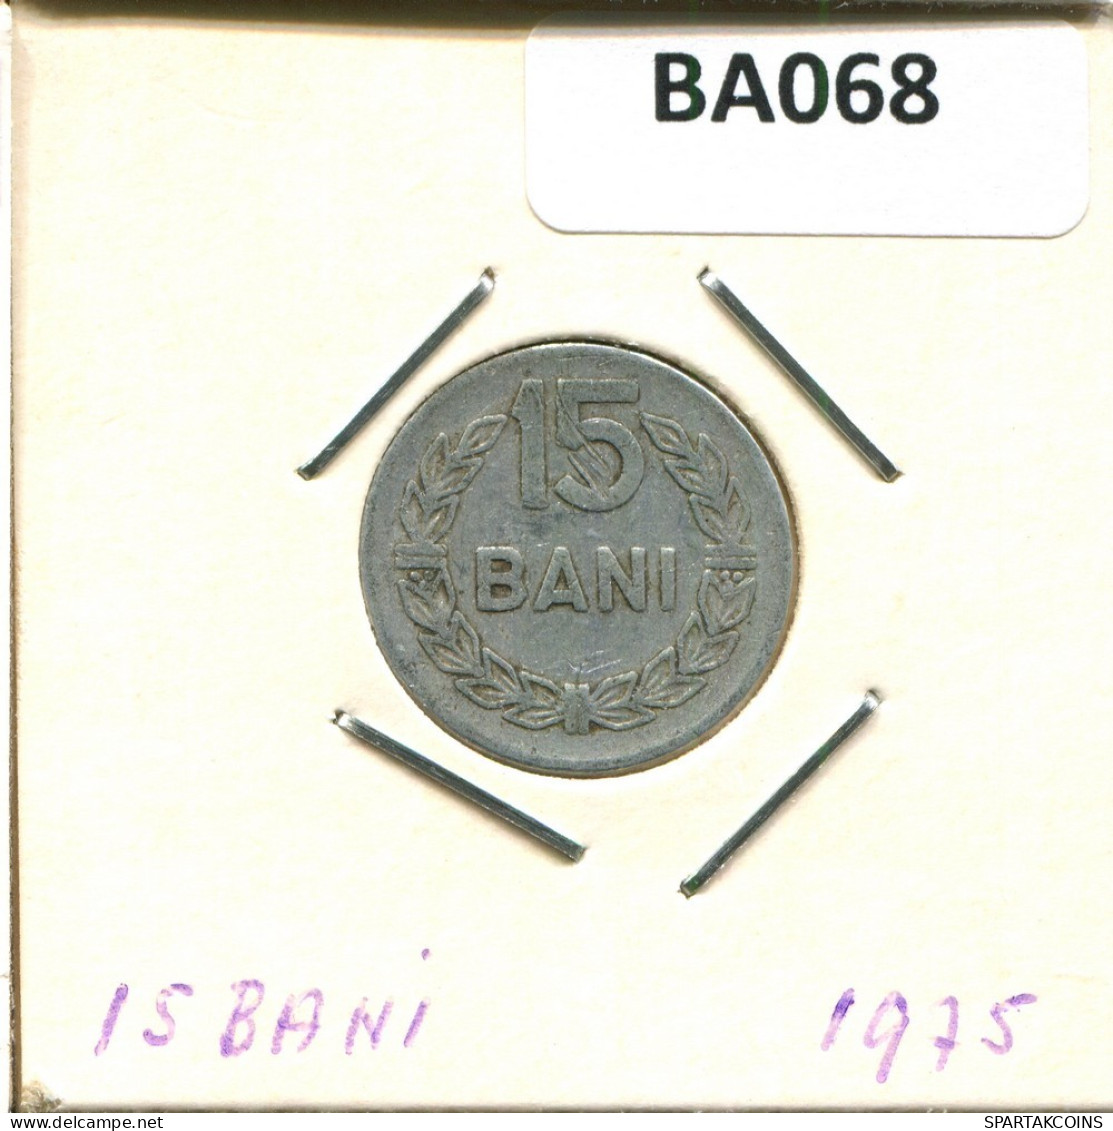 15 BANI 1975 RUMÄNIEN ROMANIA Münze #BA068.D.A - Roumanie